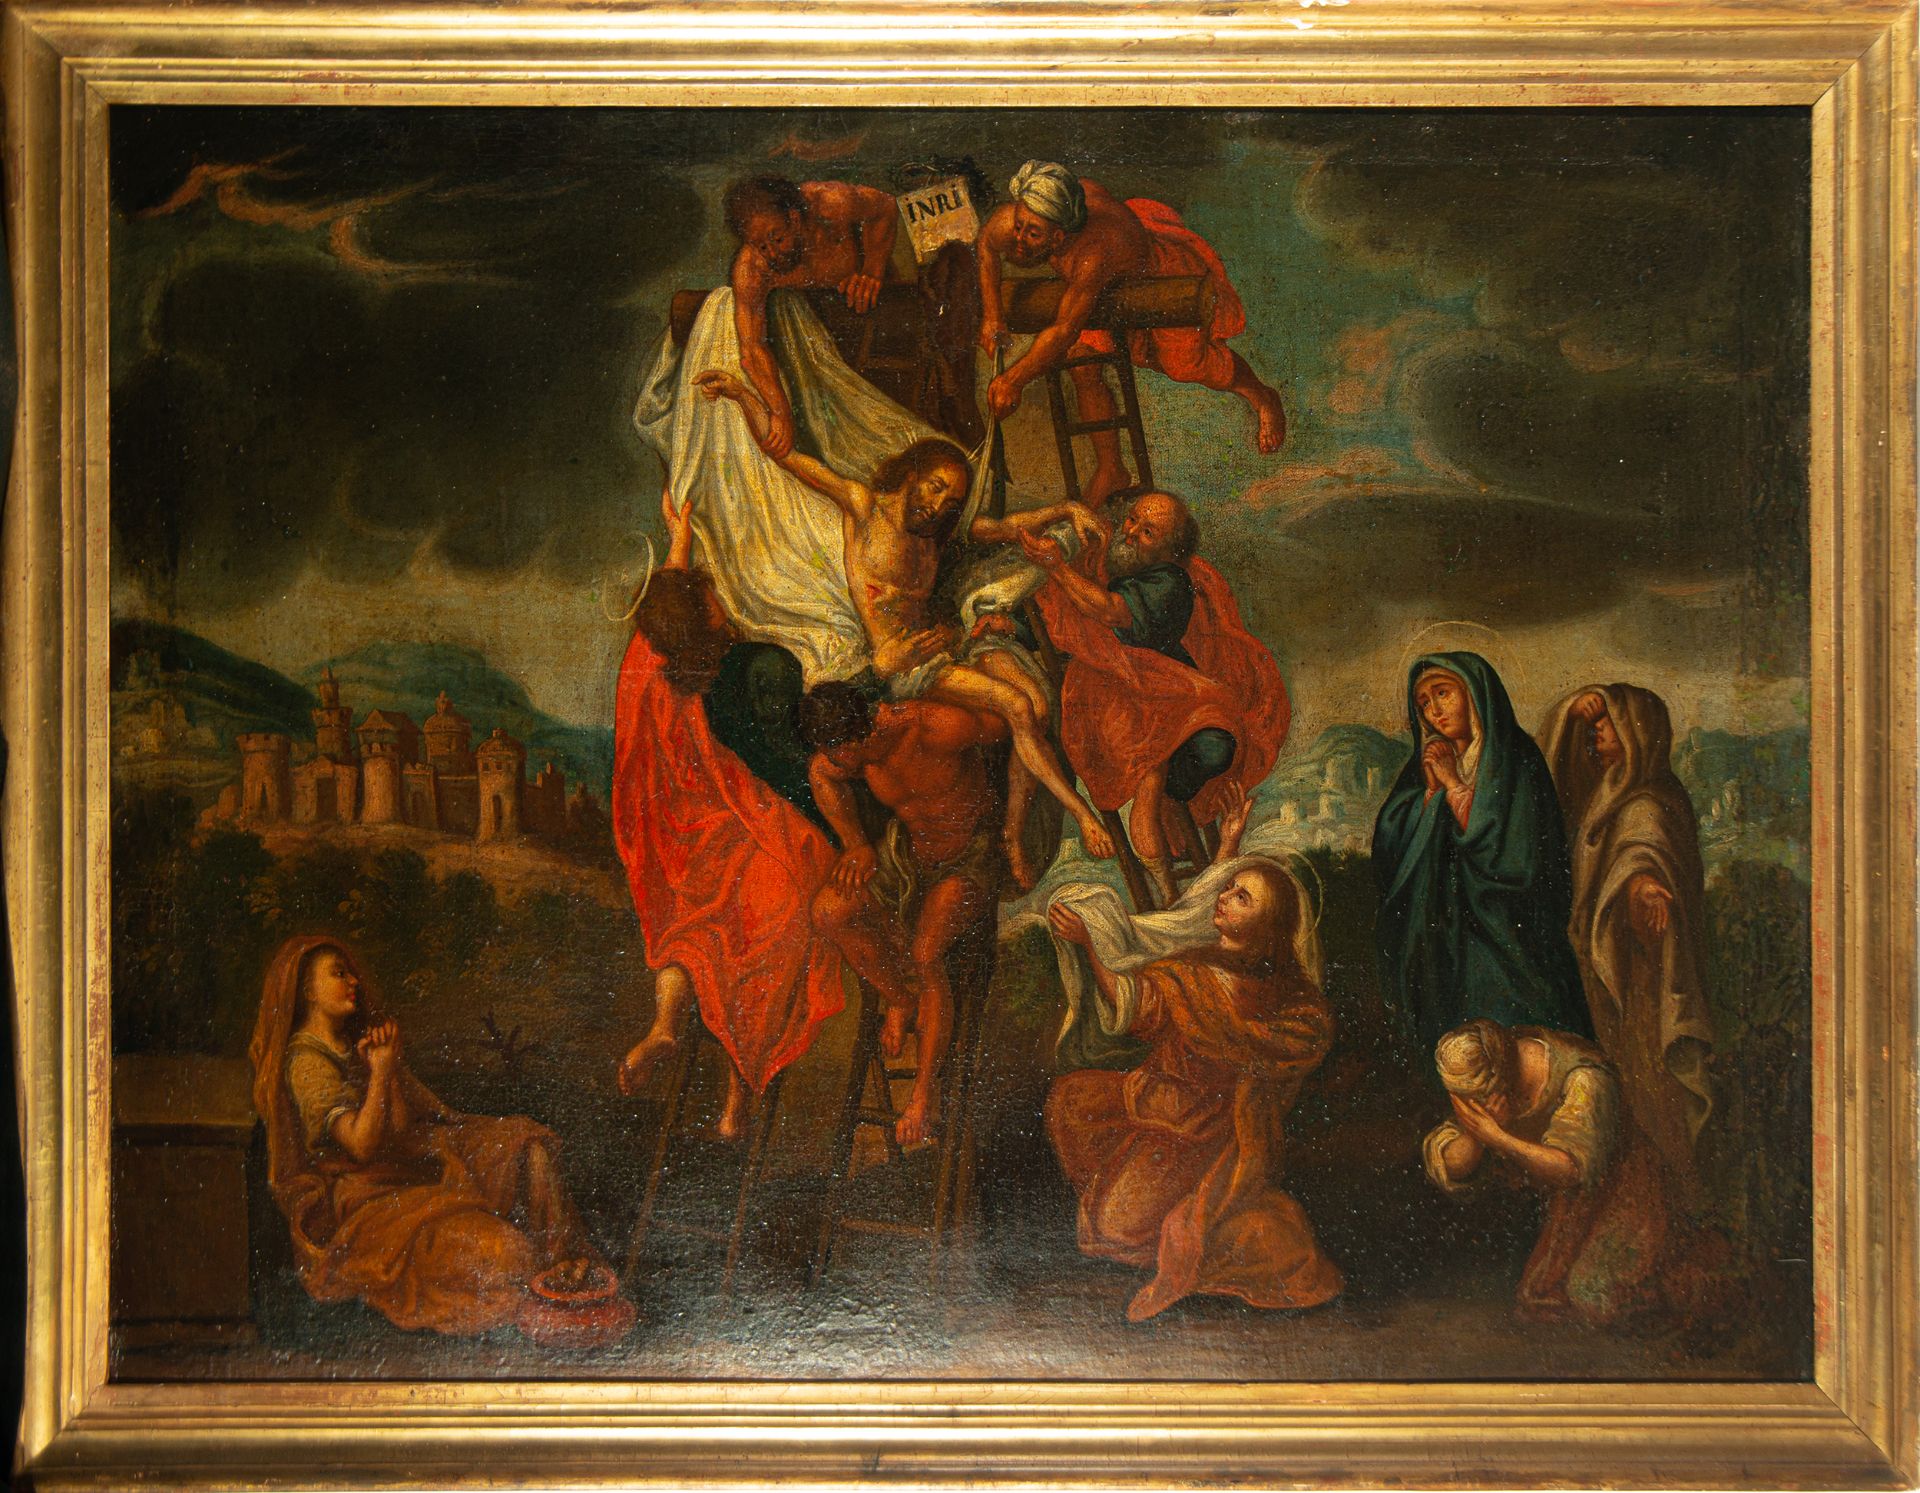 Jesus Descending from the Cross, Spanish school of the 17th century